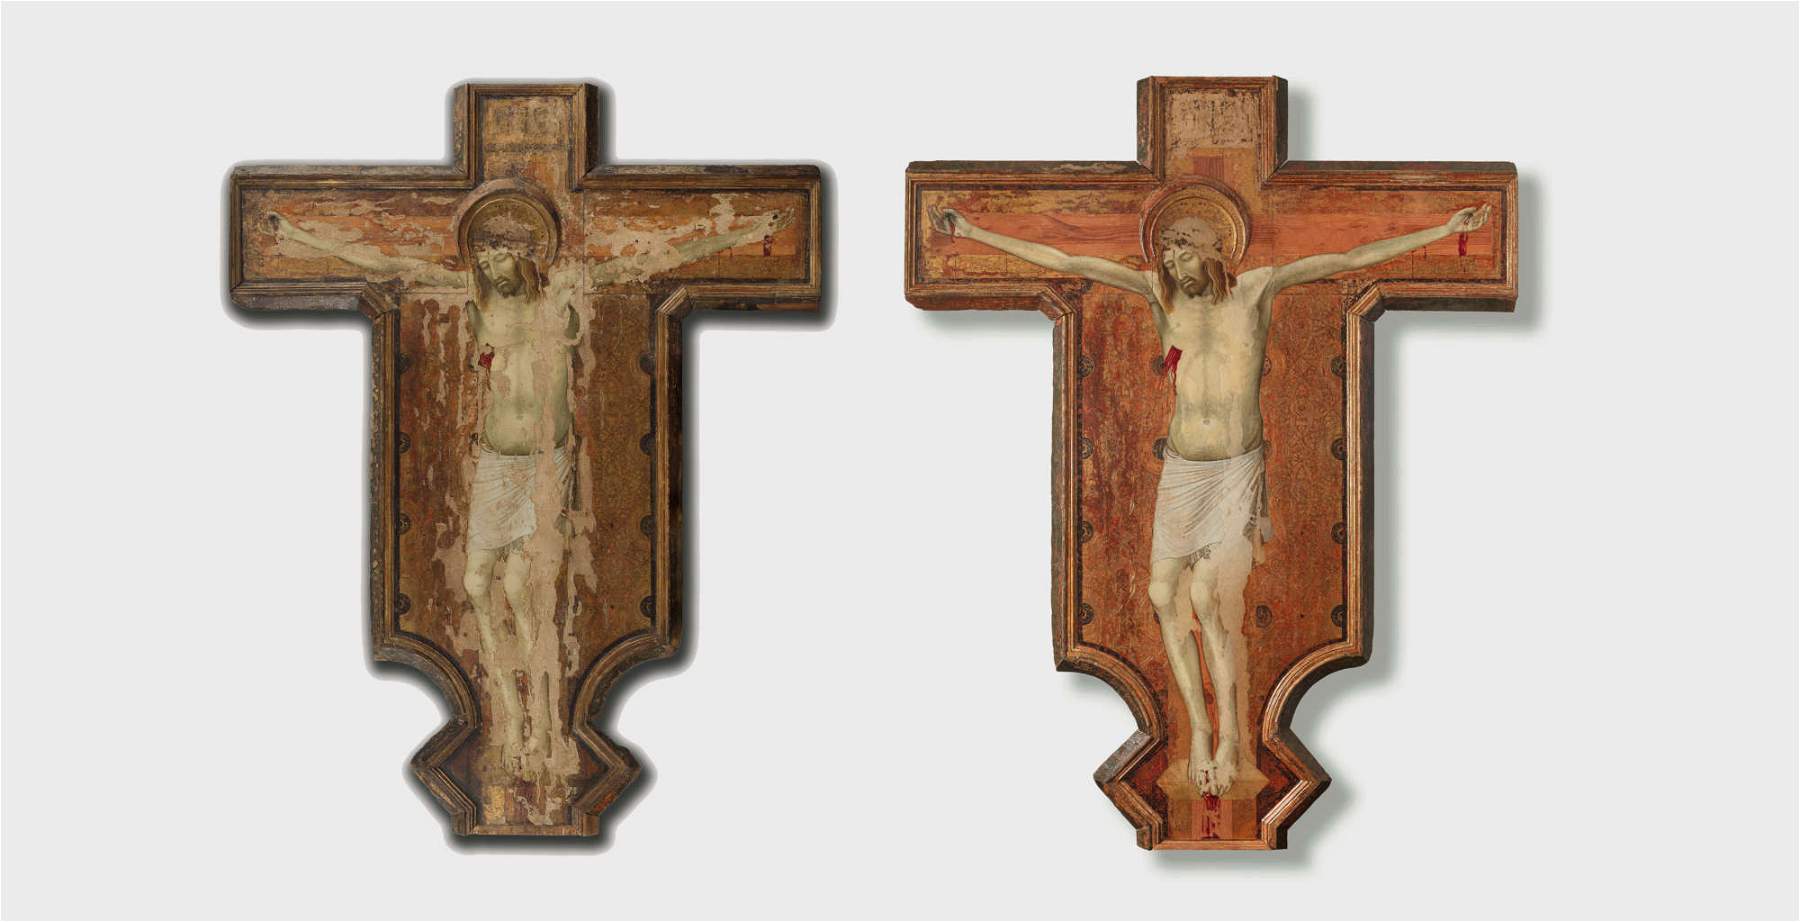 Siena, finishes restoration of Ambrogio Lorenzetti's Cross of Carmine